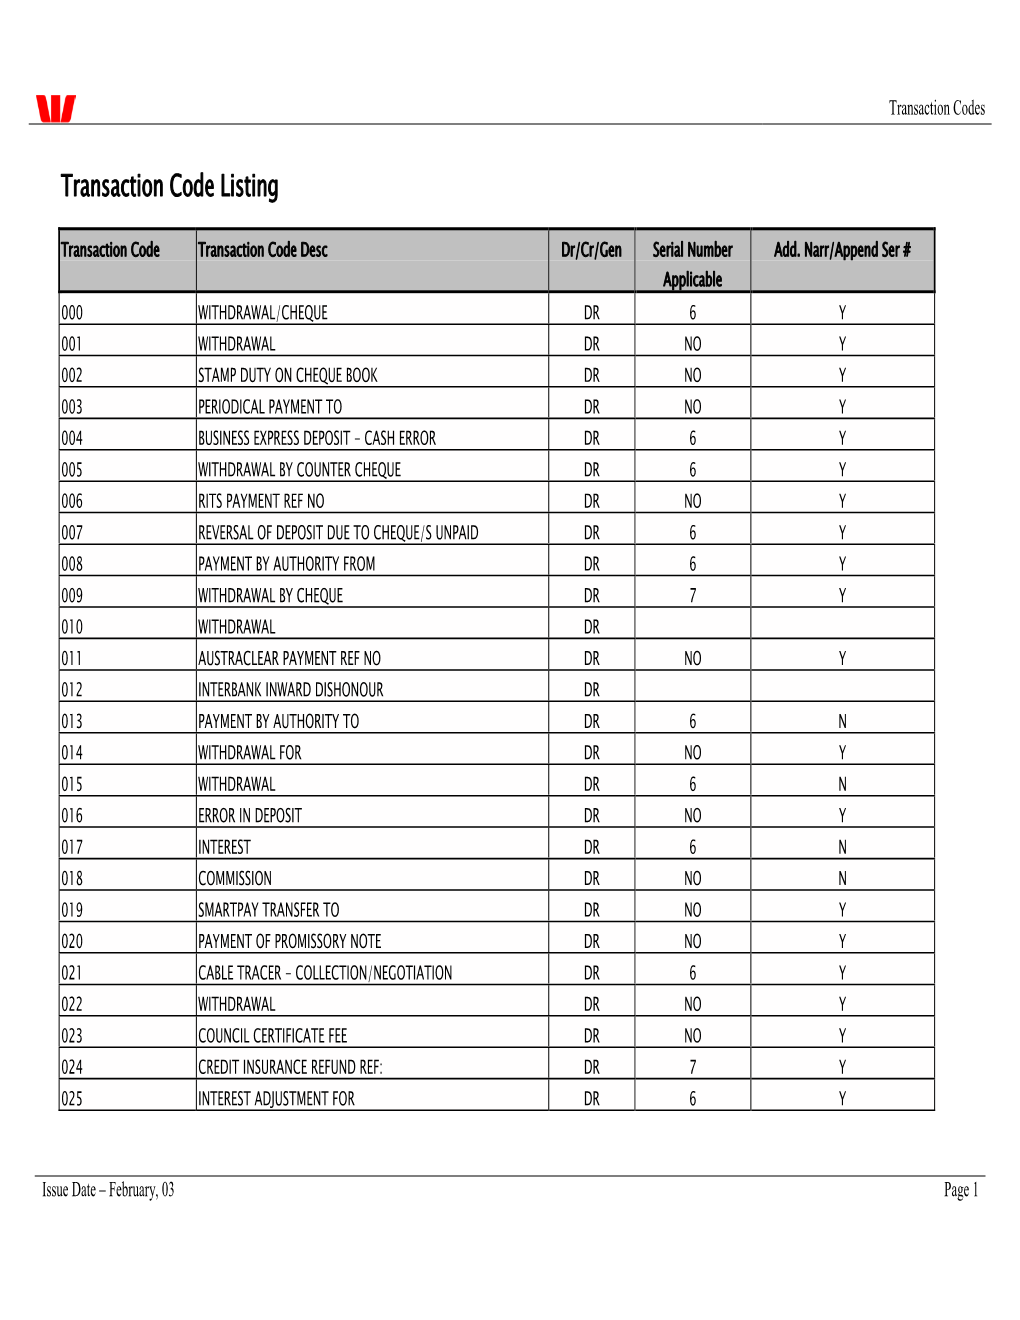 Transaction Code Listing